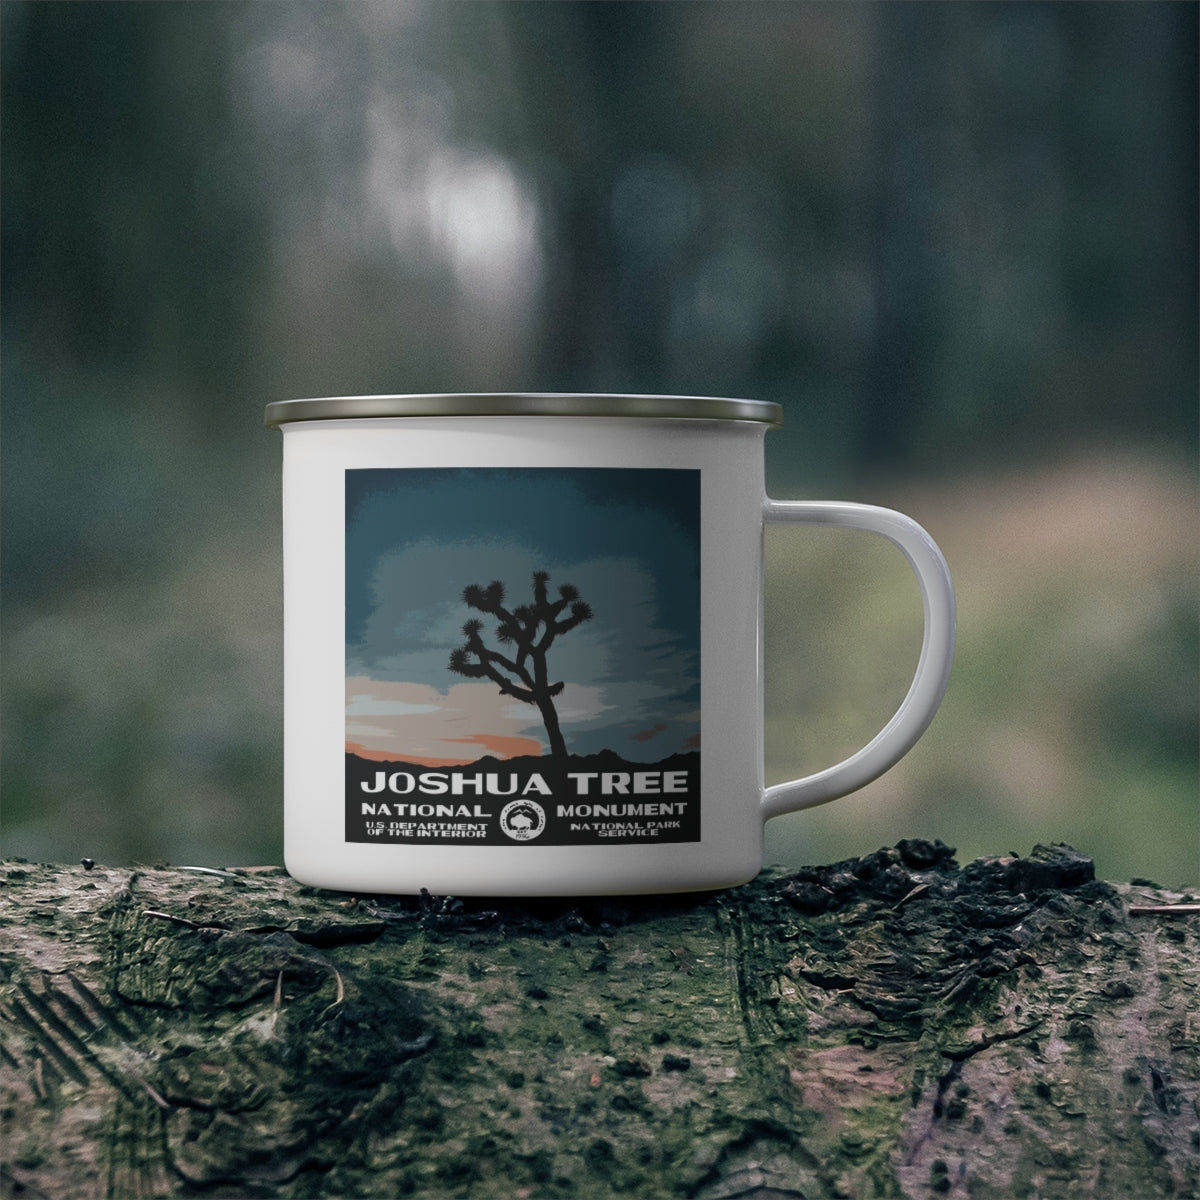 Joshua Tree National Park Enamel Camping Mug